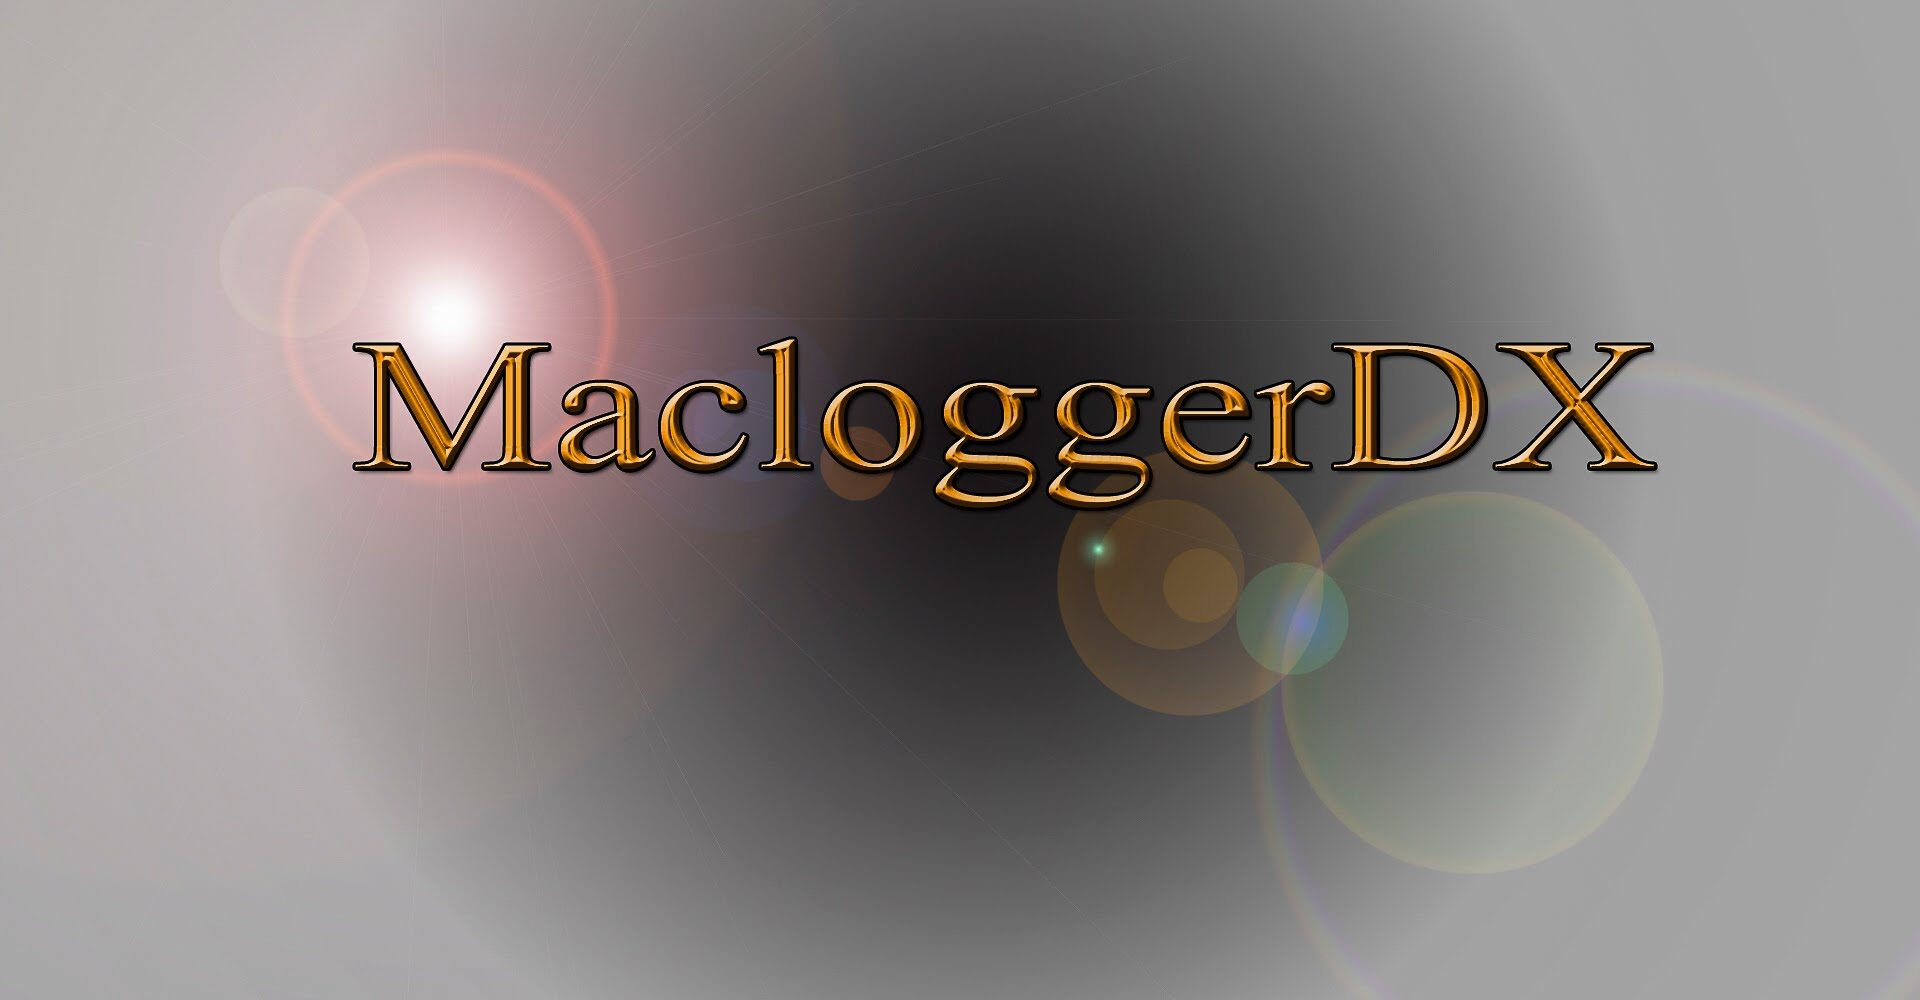 rumlogng vs macloggerdx